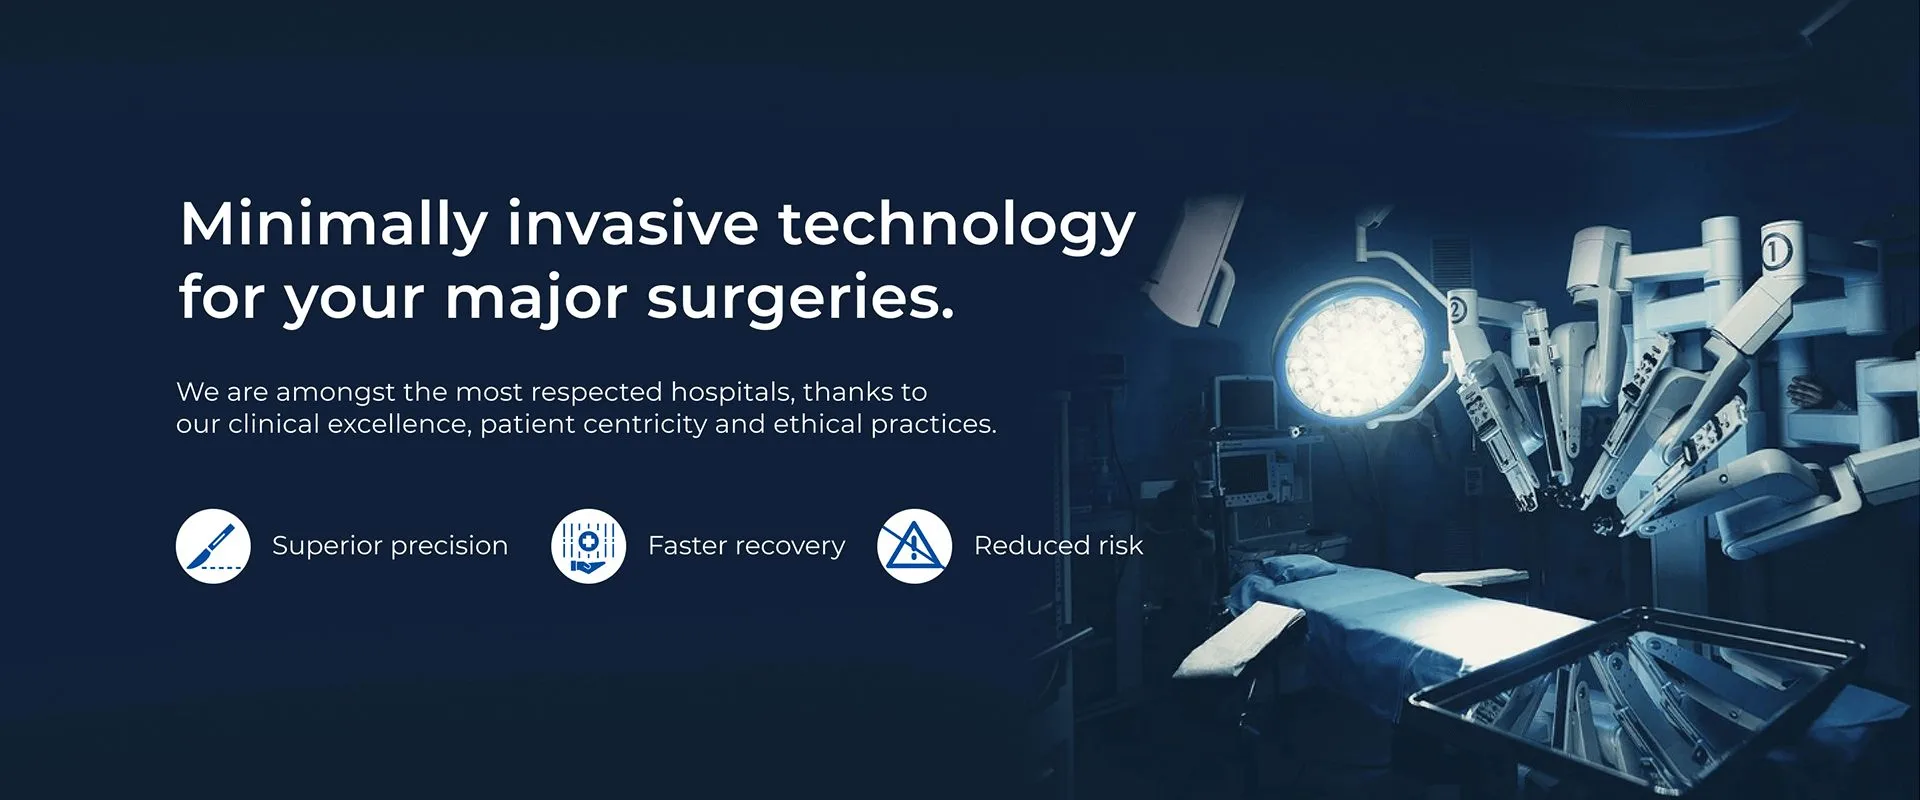 Best Hospital For Minimally Invasive Surgery